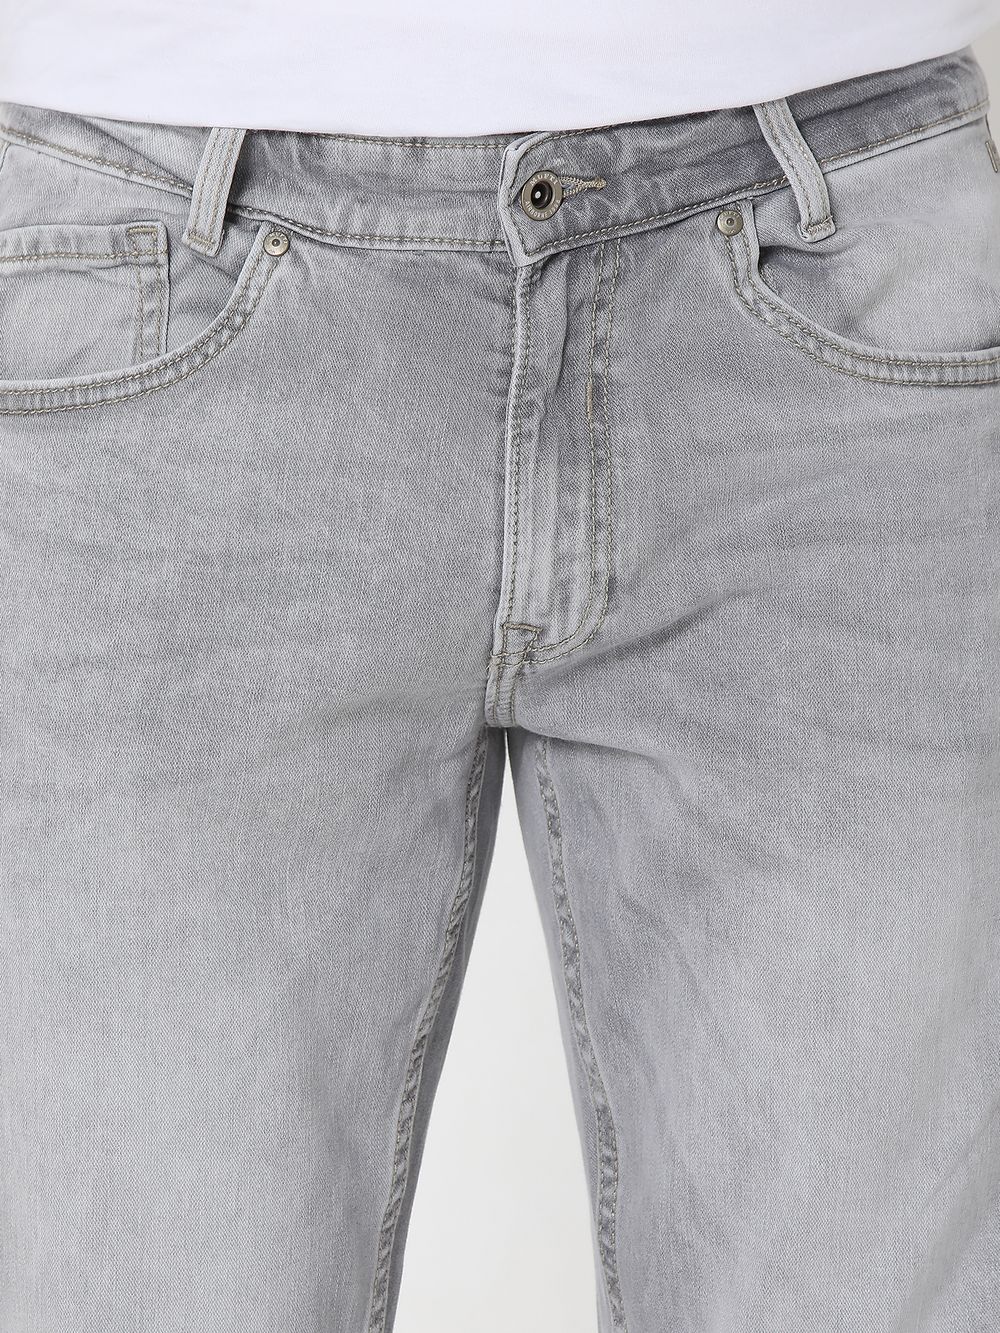 Grey Straight Fit Originals Stretch Jeans